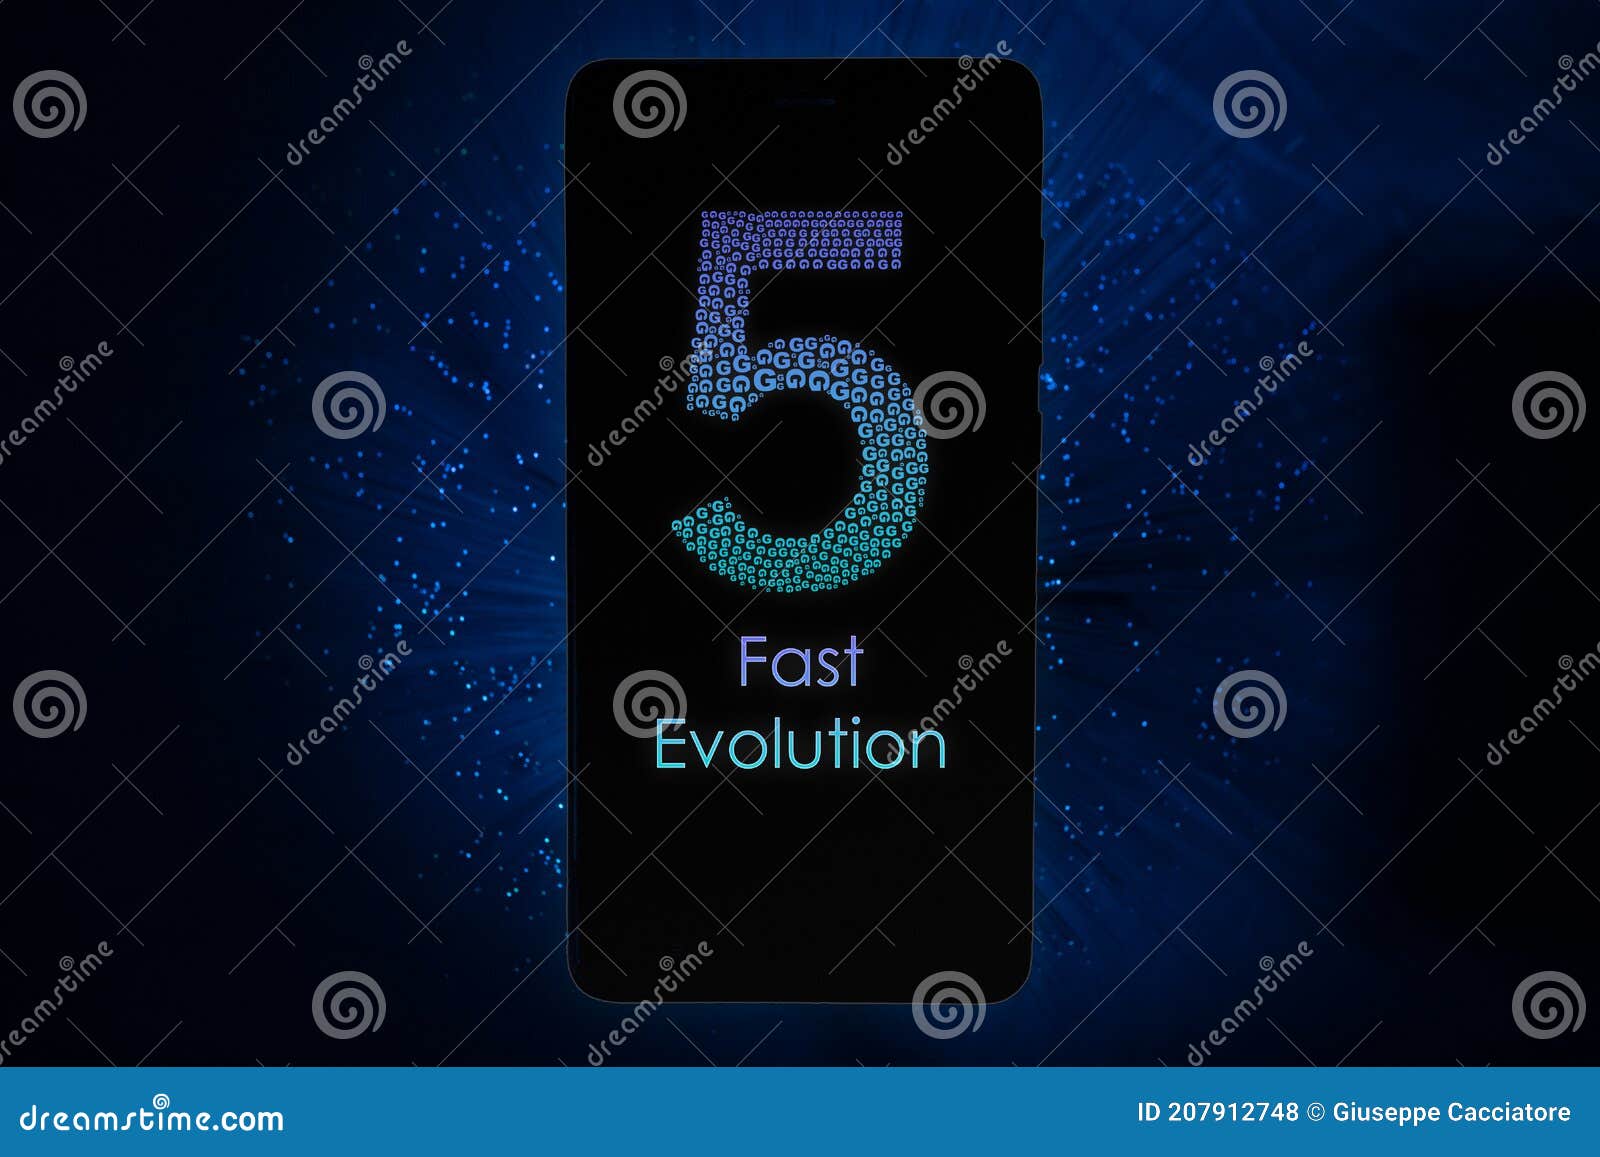 fast mobile internet 5g for smartphone